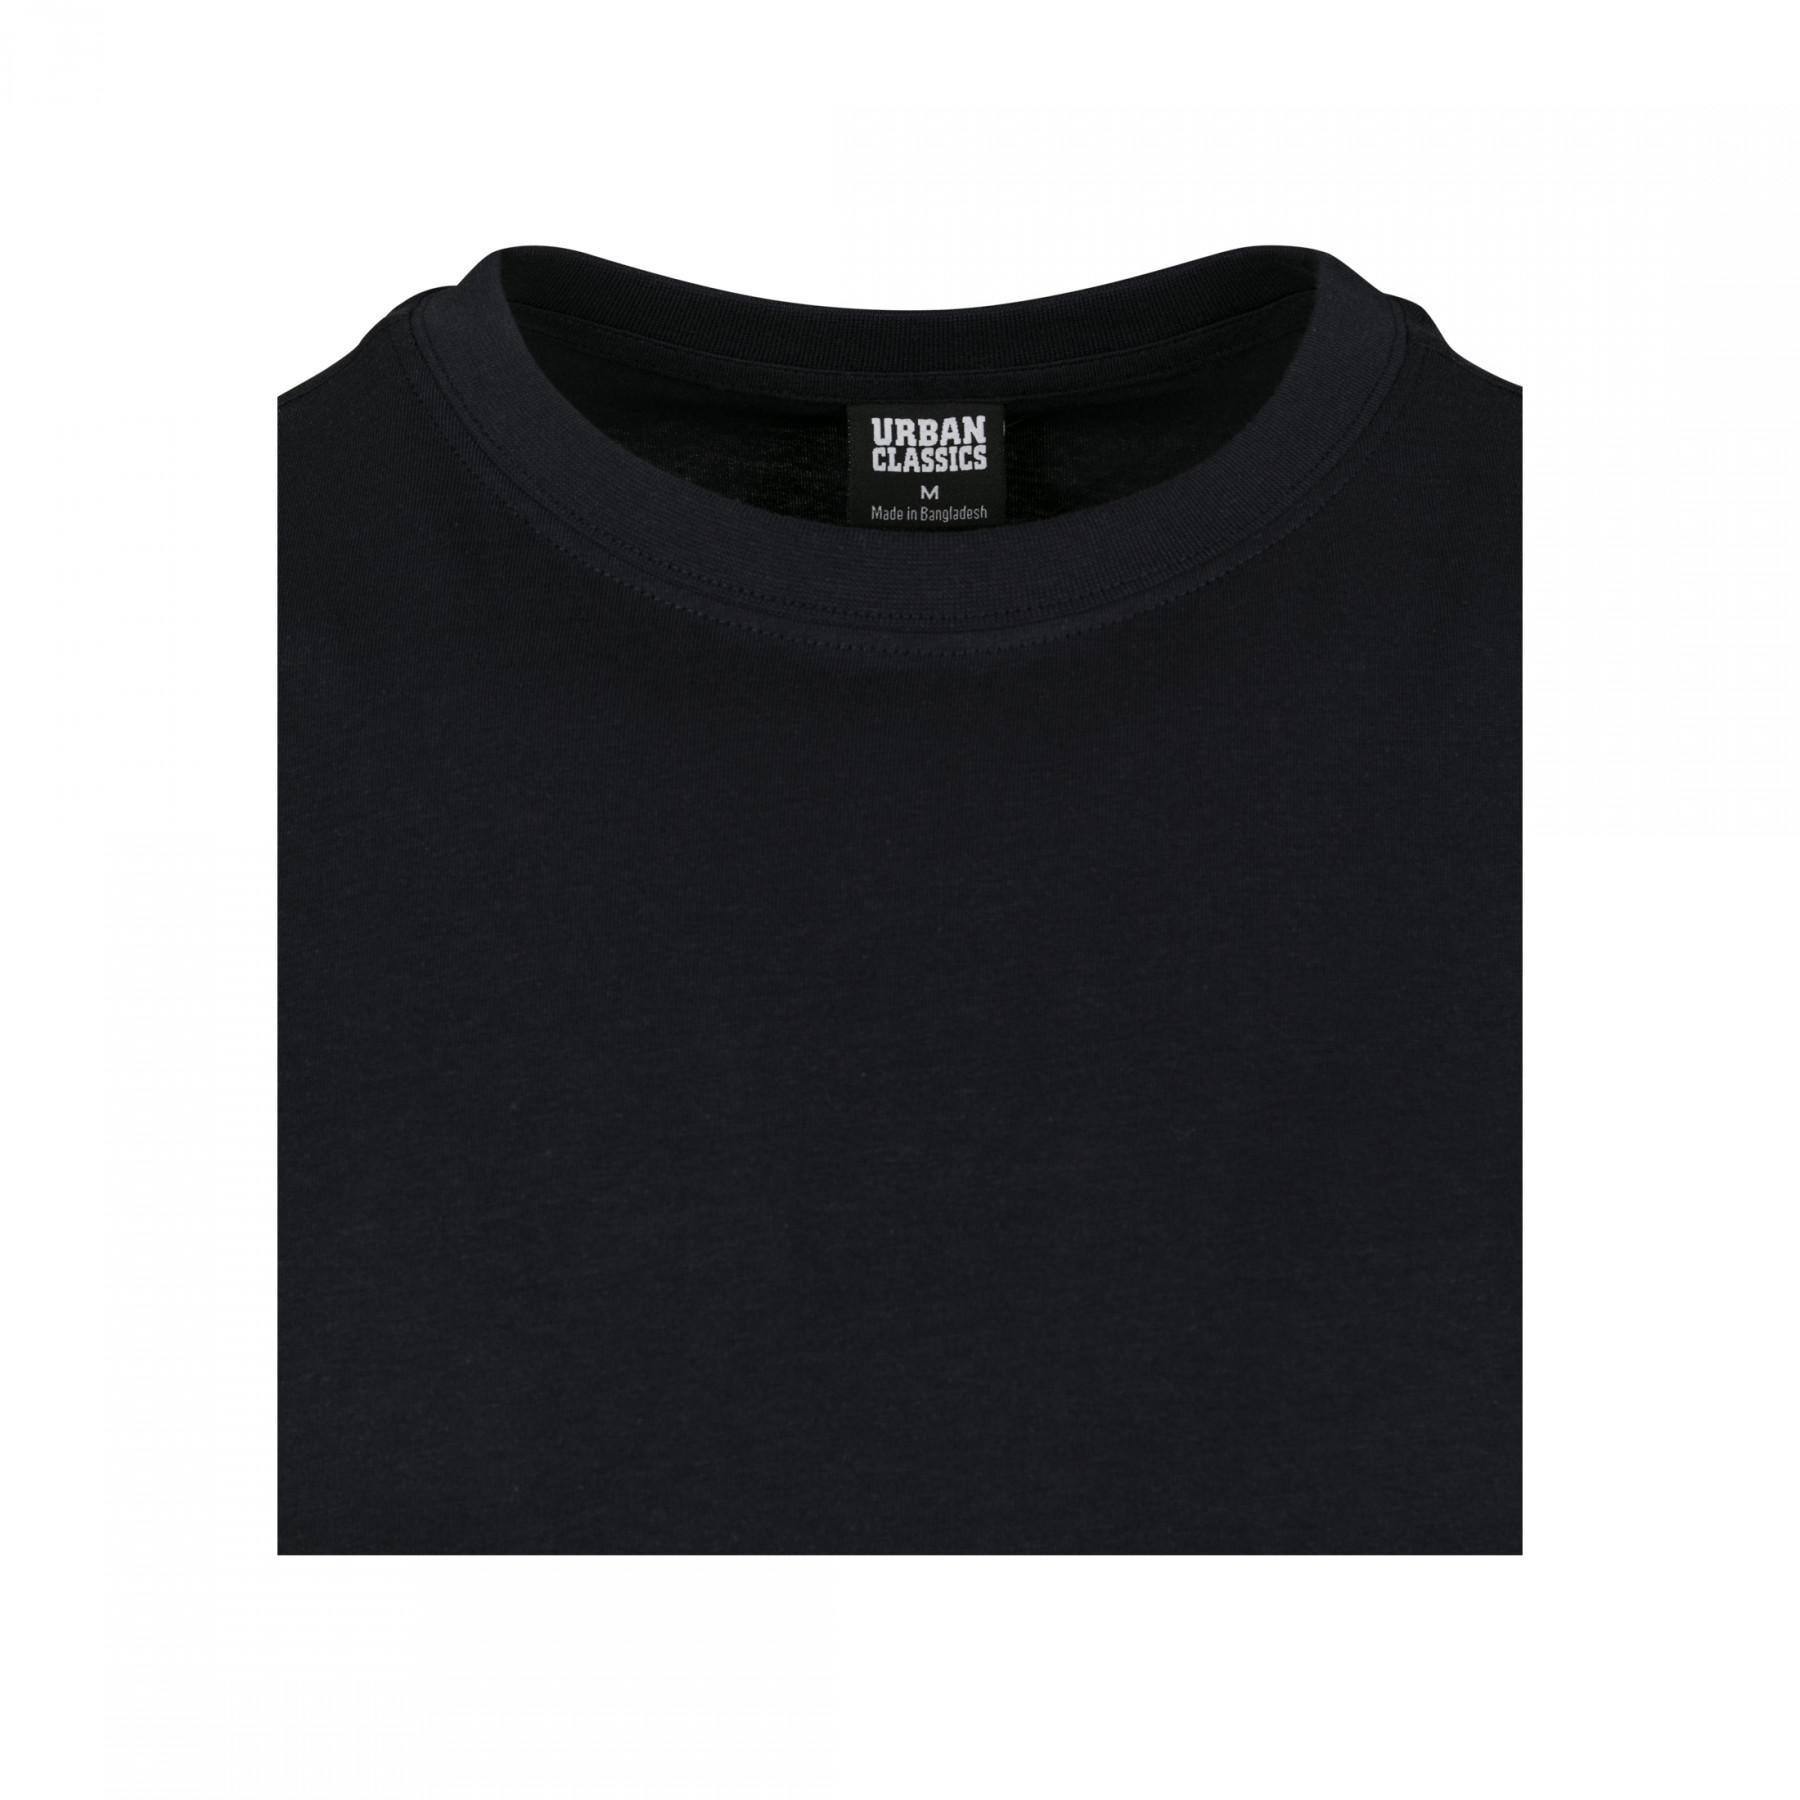 T-Shirt urban klassisch 3-farbig